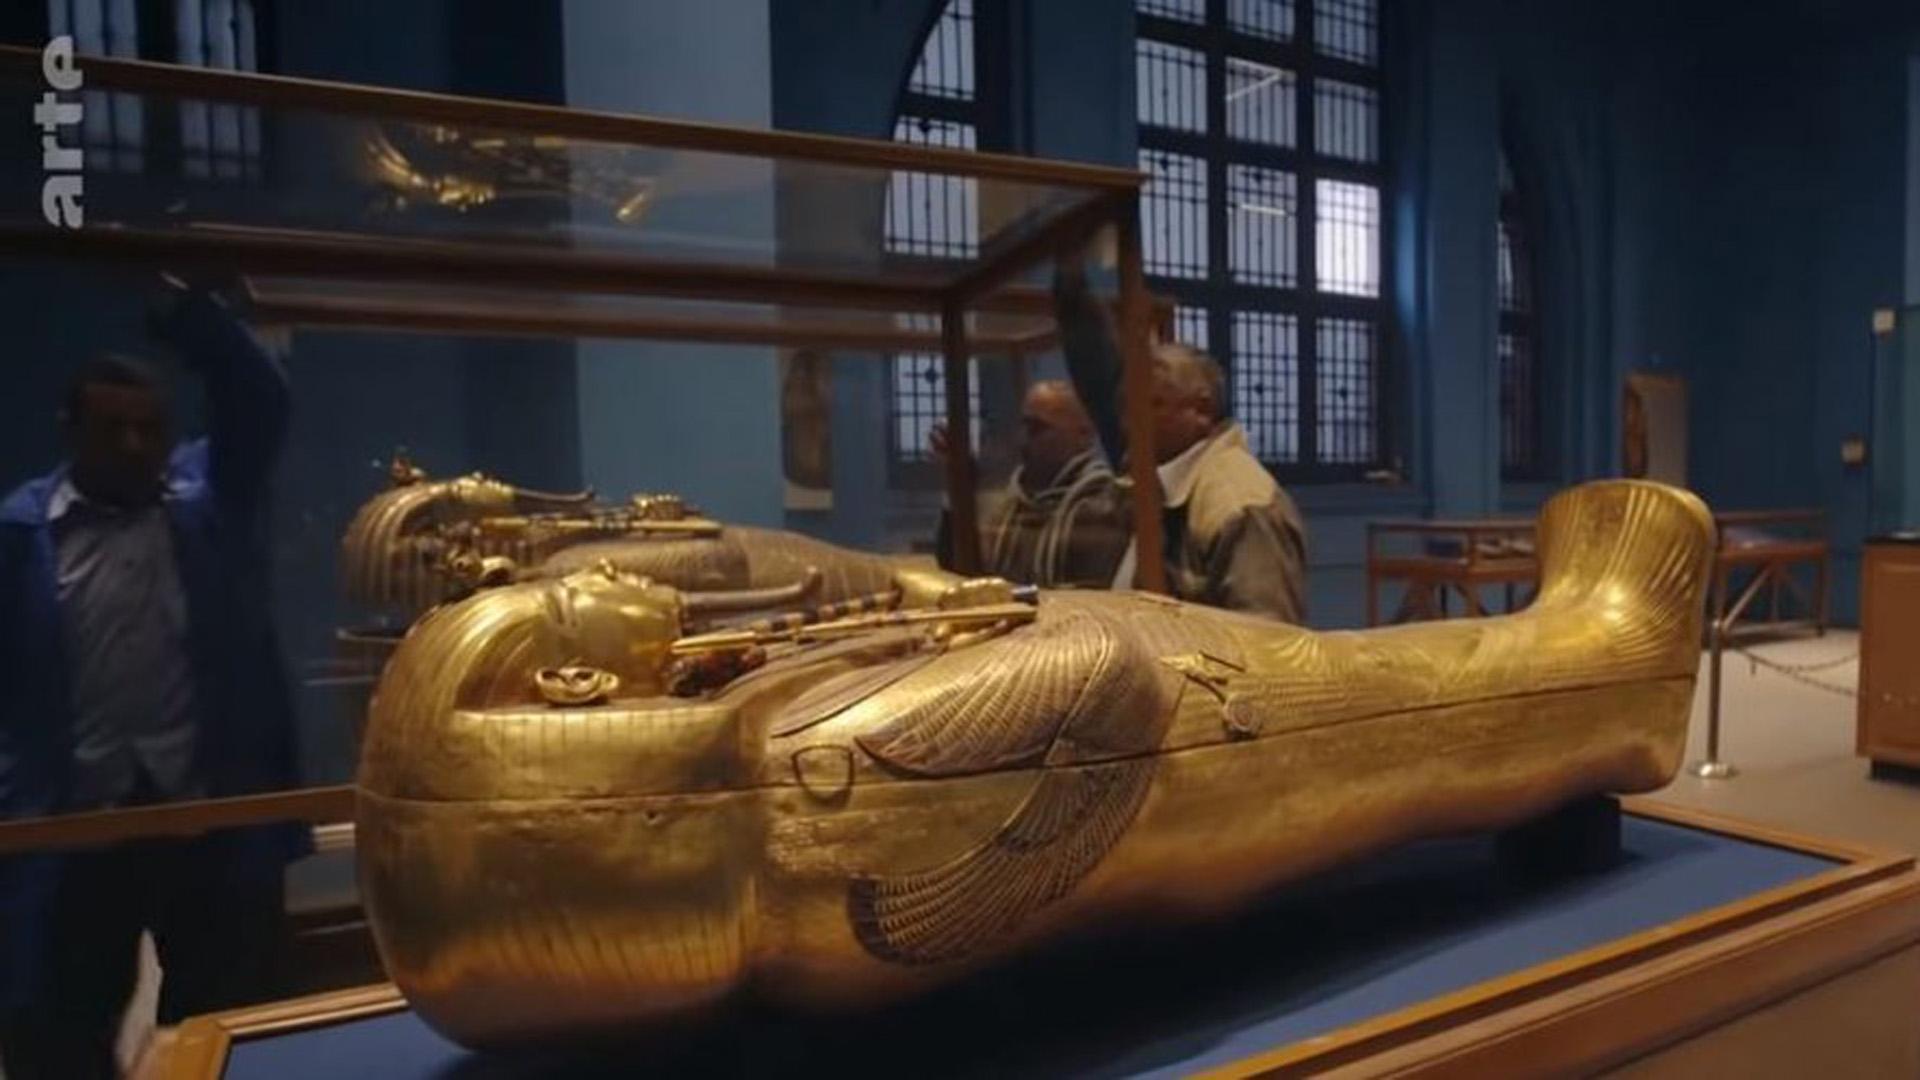 Tutankhamun, the rediscovered treasure